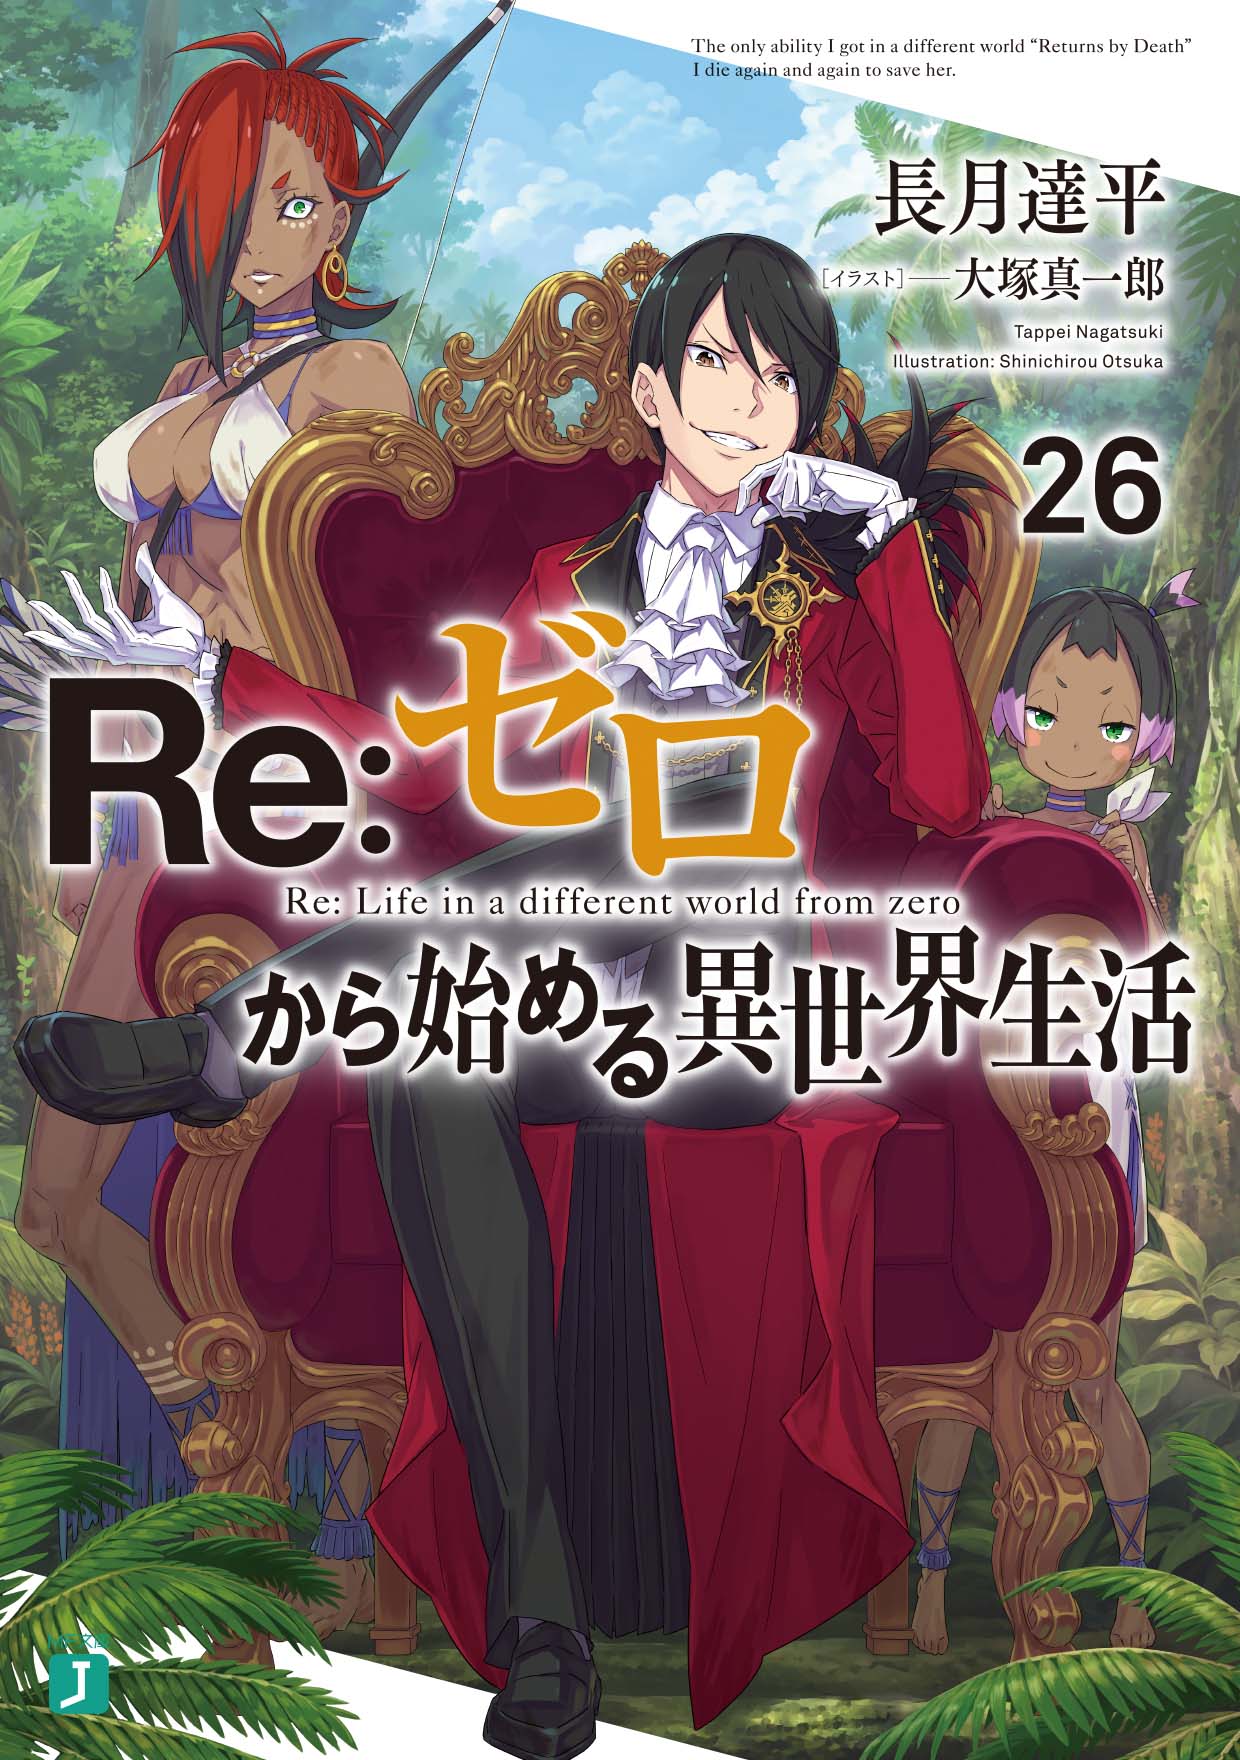 Re:Zero Arco 4  Resumo Segunda Temporada Parte 2 (Web Novel) - Spoilers !  